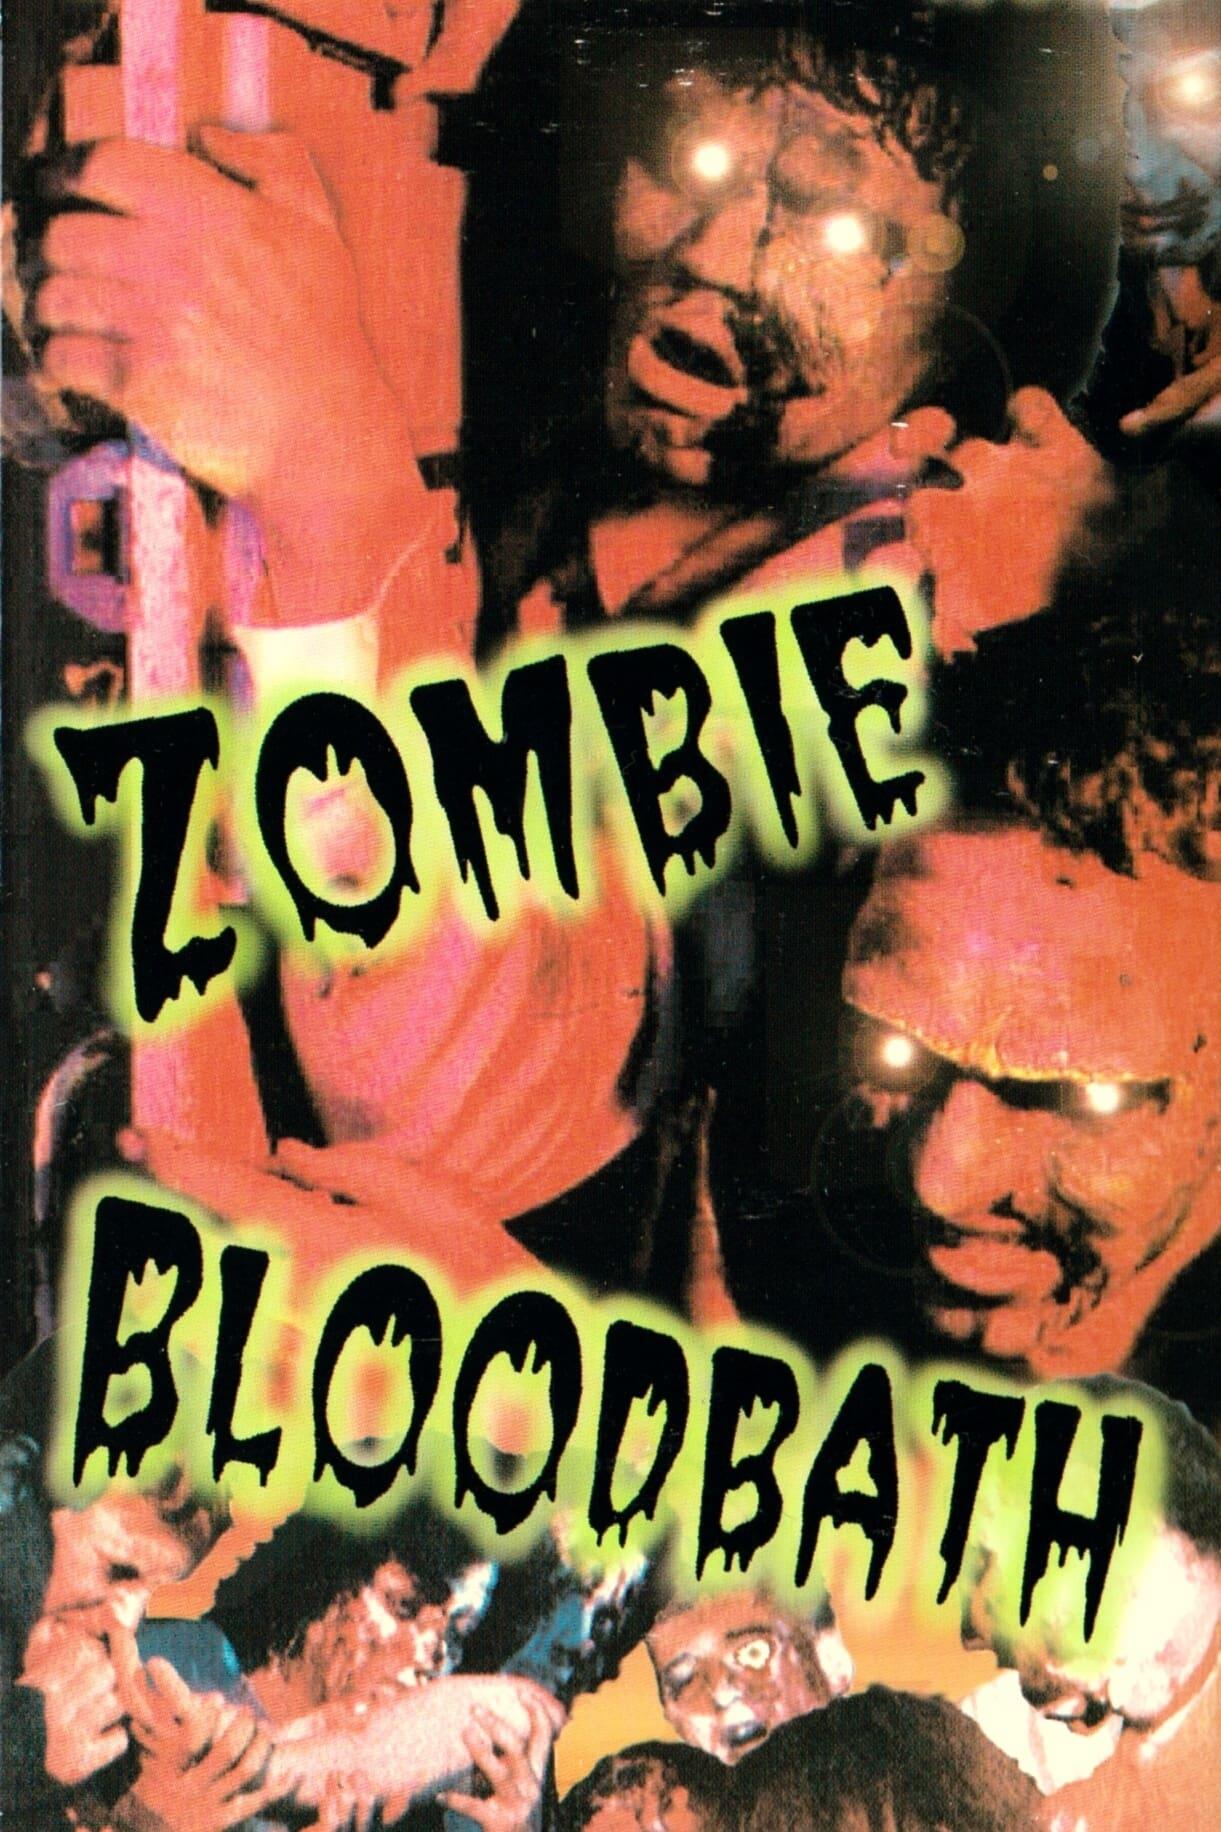 Zombie Bloodbath poster